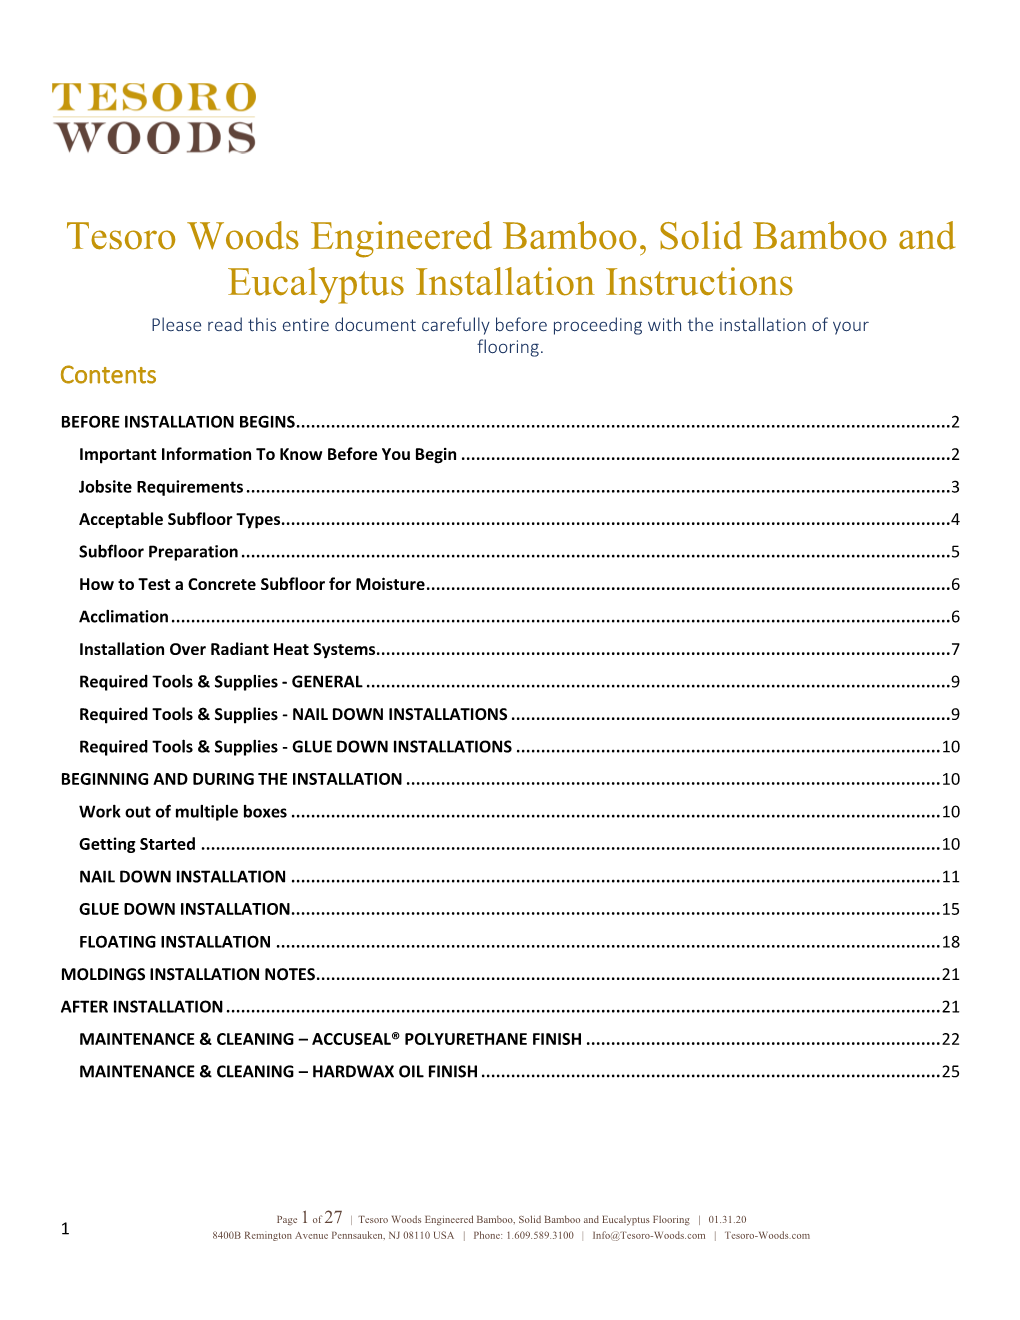 Tesoro Woods Engineered Bamboo, Solid Bamboo and Eucalyptus Installation Instructions